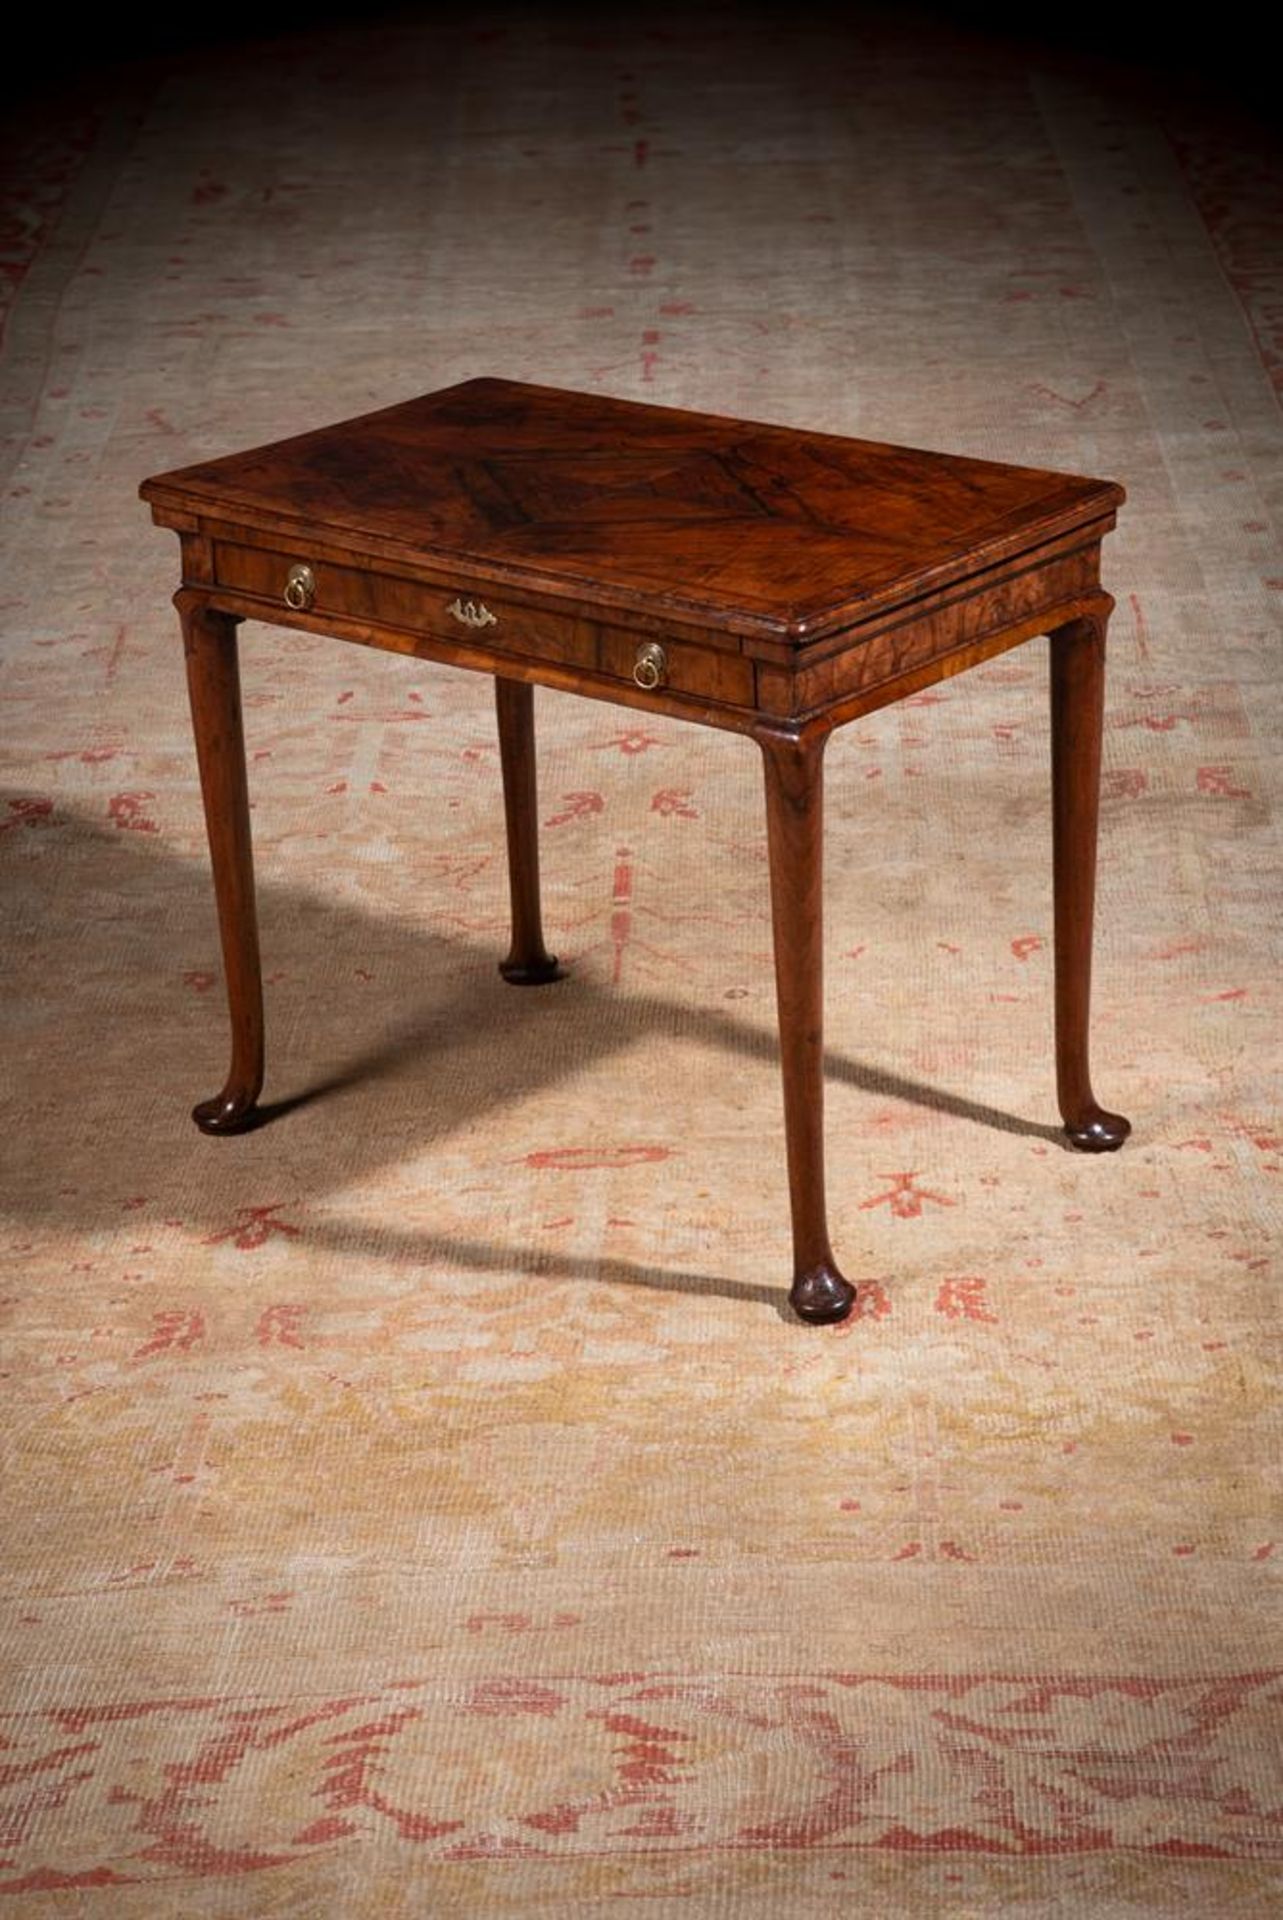 A FINE QUEEN ANNE FIGURED WALNUT SIDE TABLE, CIRCA 1710